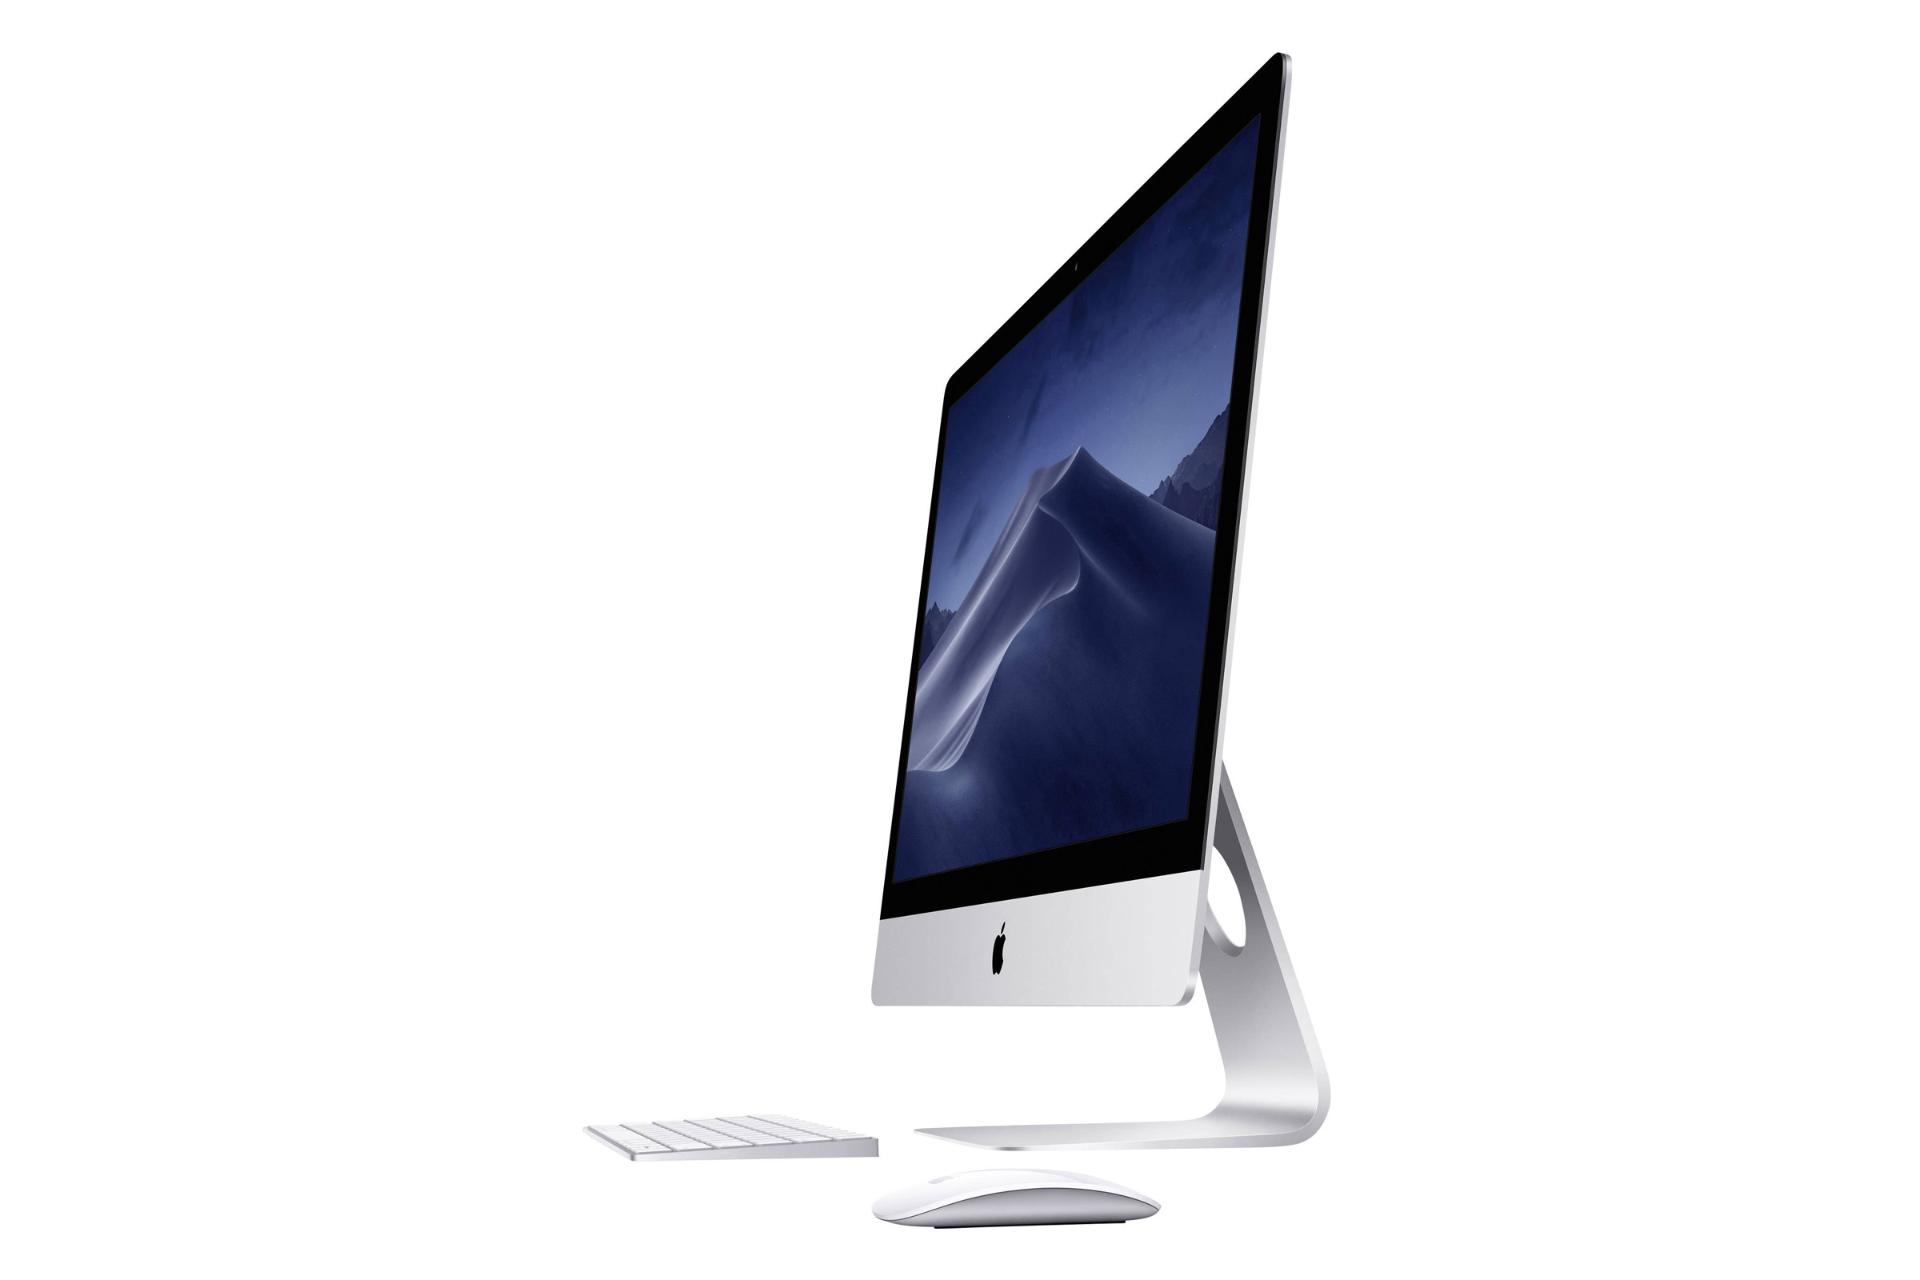 نمای جانبی کامپیوتر آل این وان اپل All in One Apple iMac 27 inch 2019 همراه ماوس و کیبورد